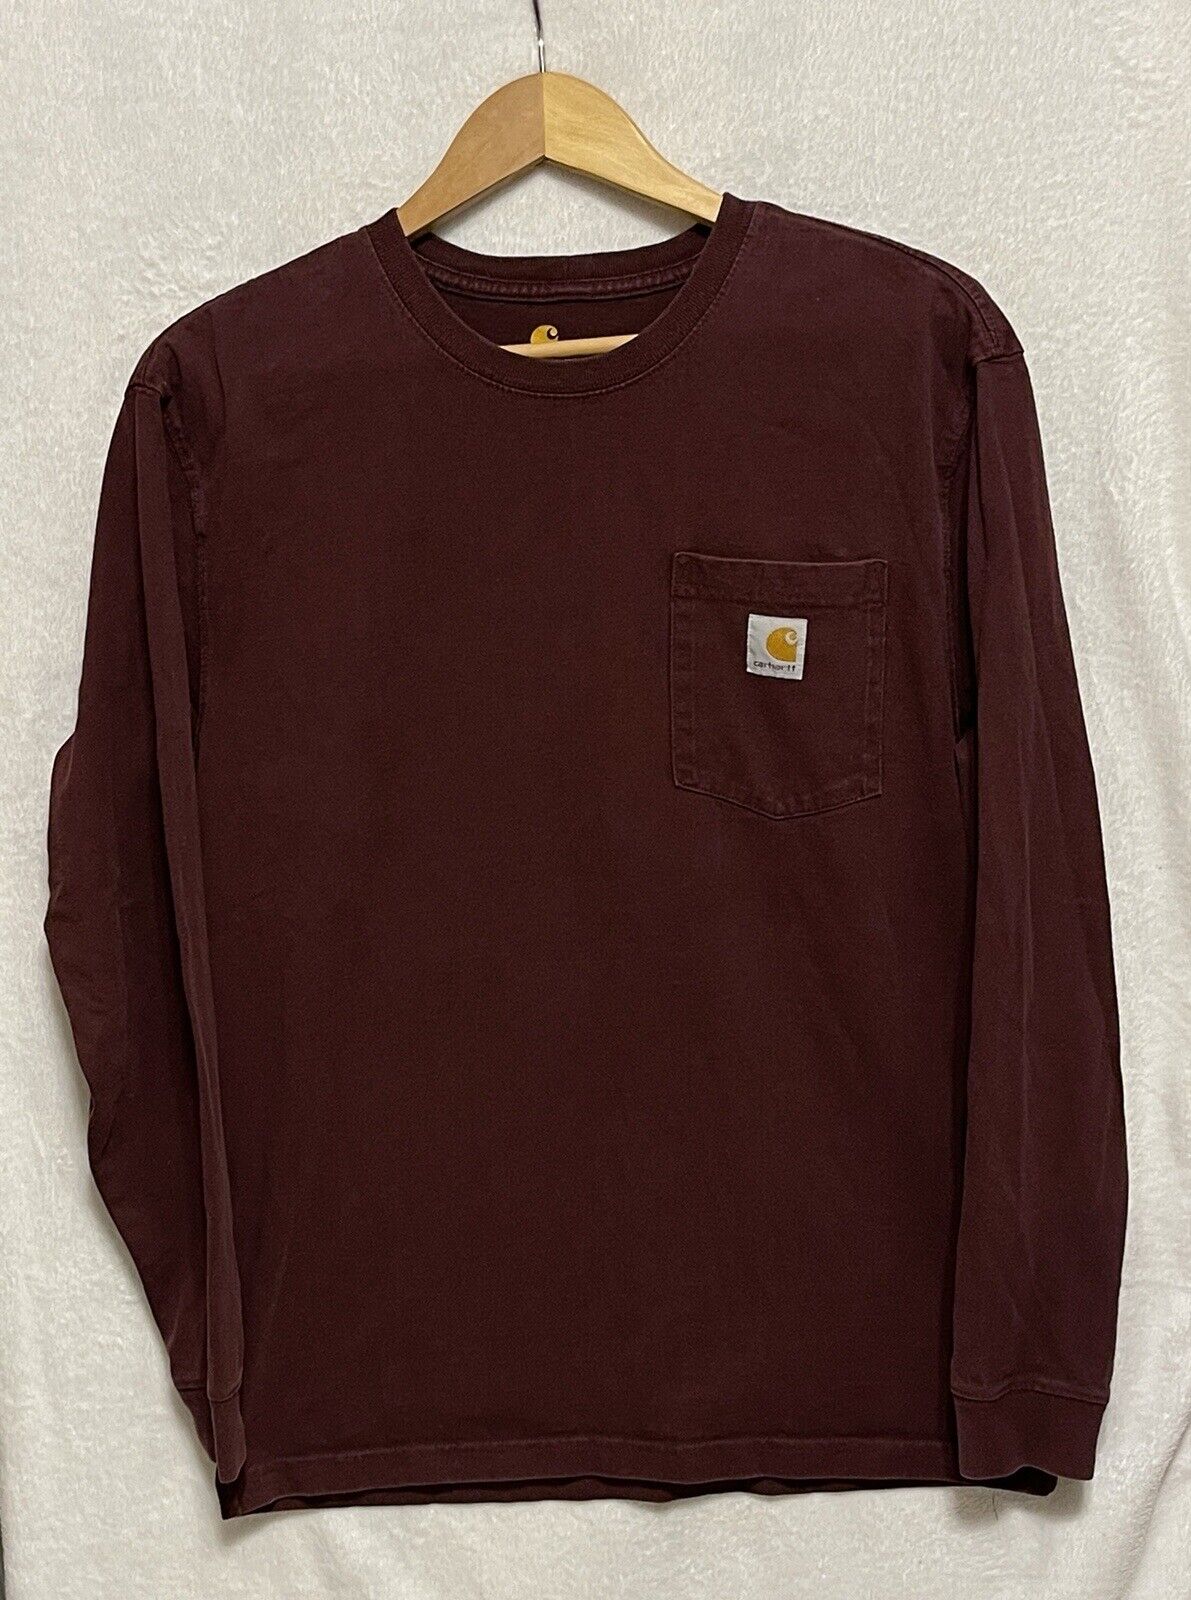 Carhartt K126 Mens Size M Long Sleeve Pocket Tshirt Original Fit Port Maroon